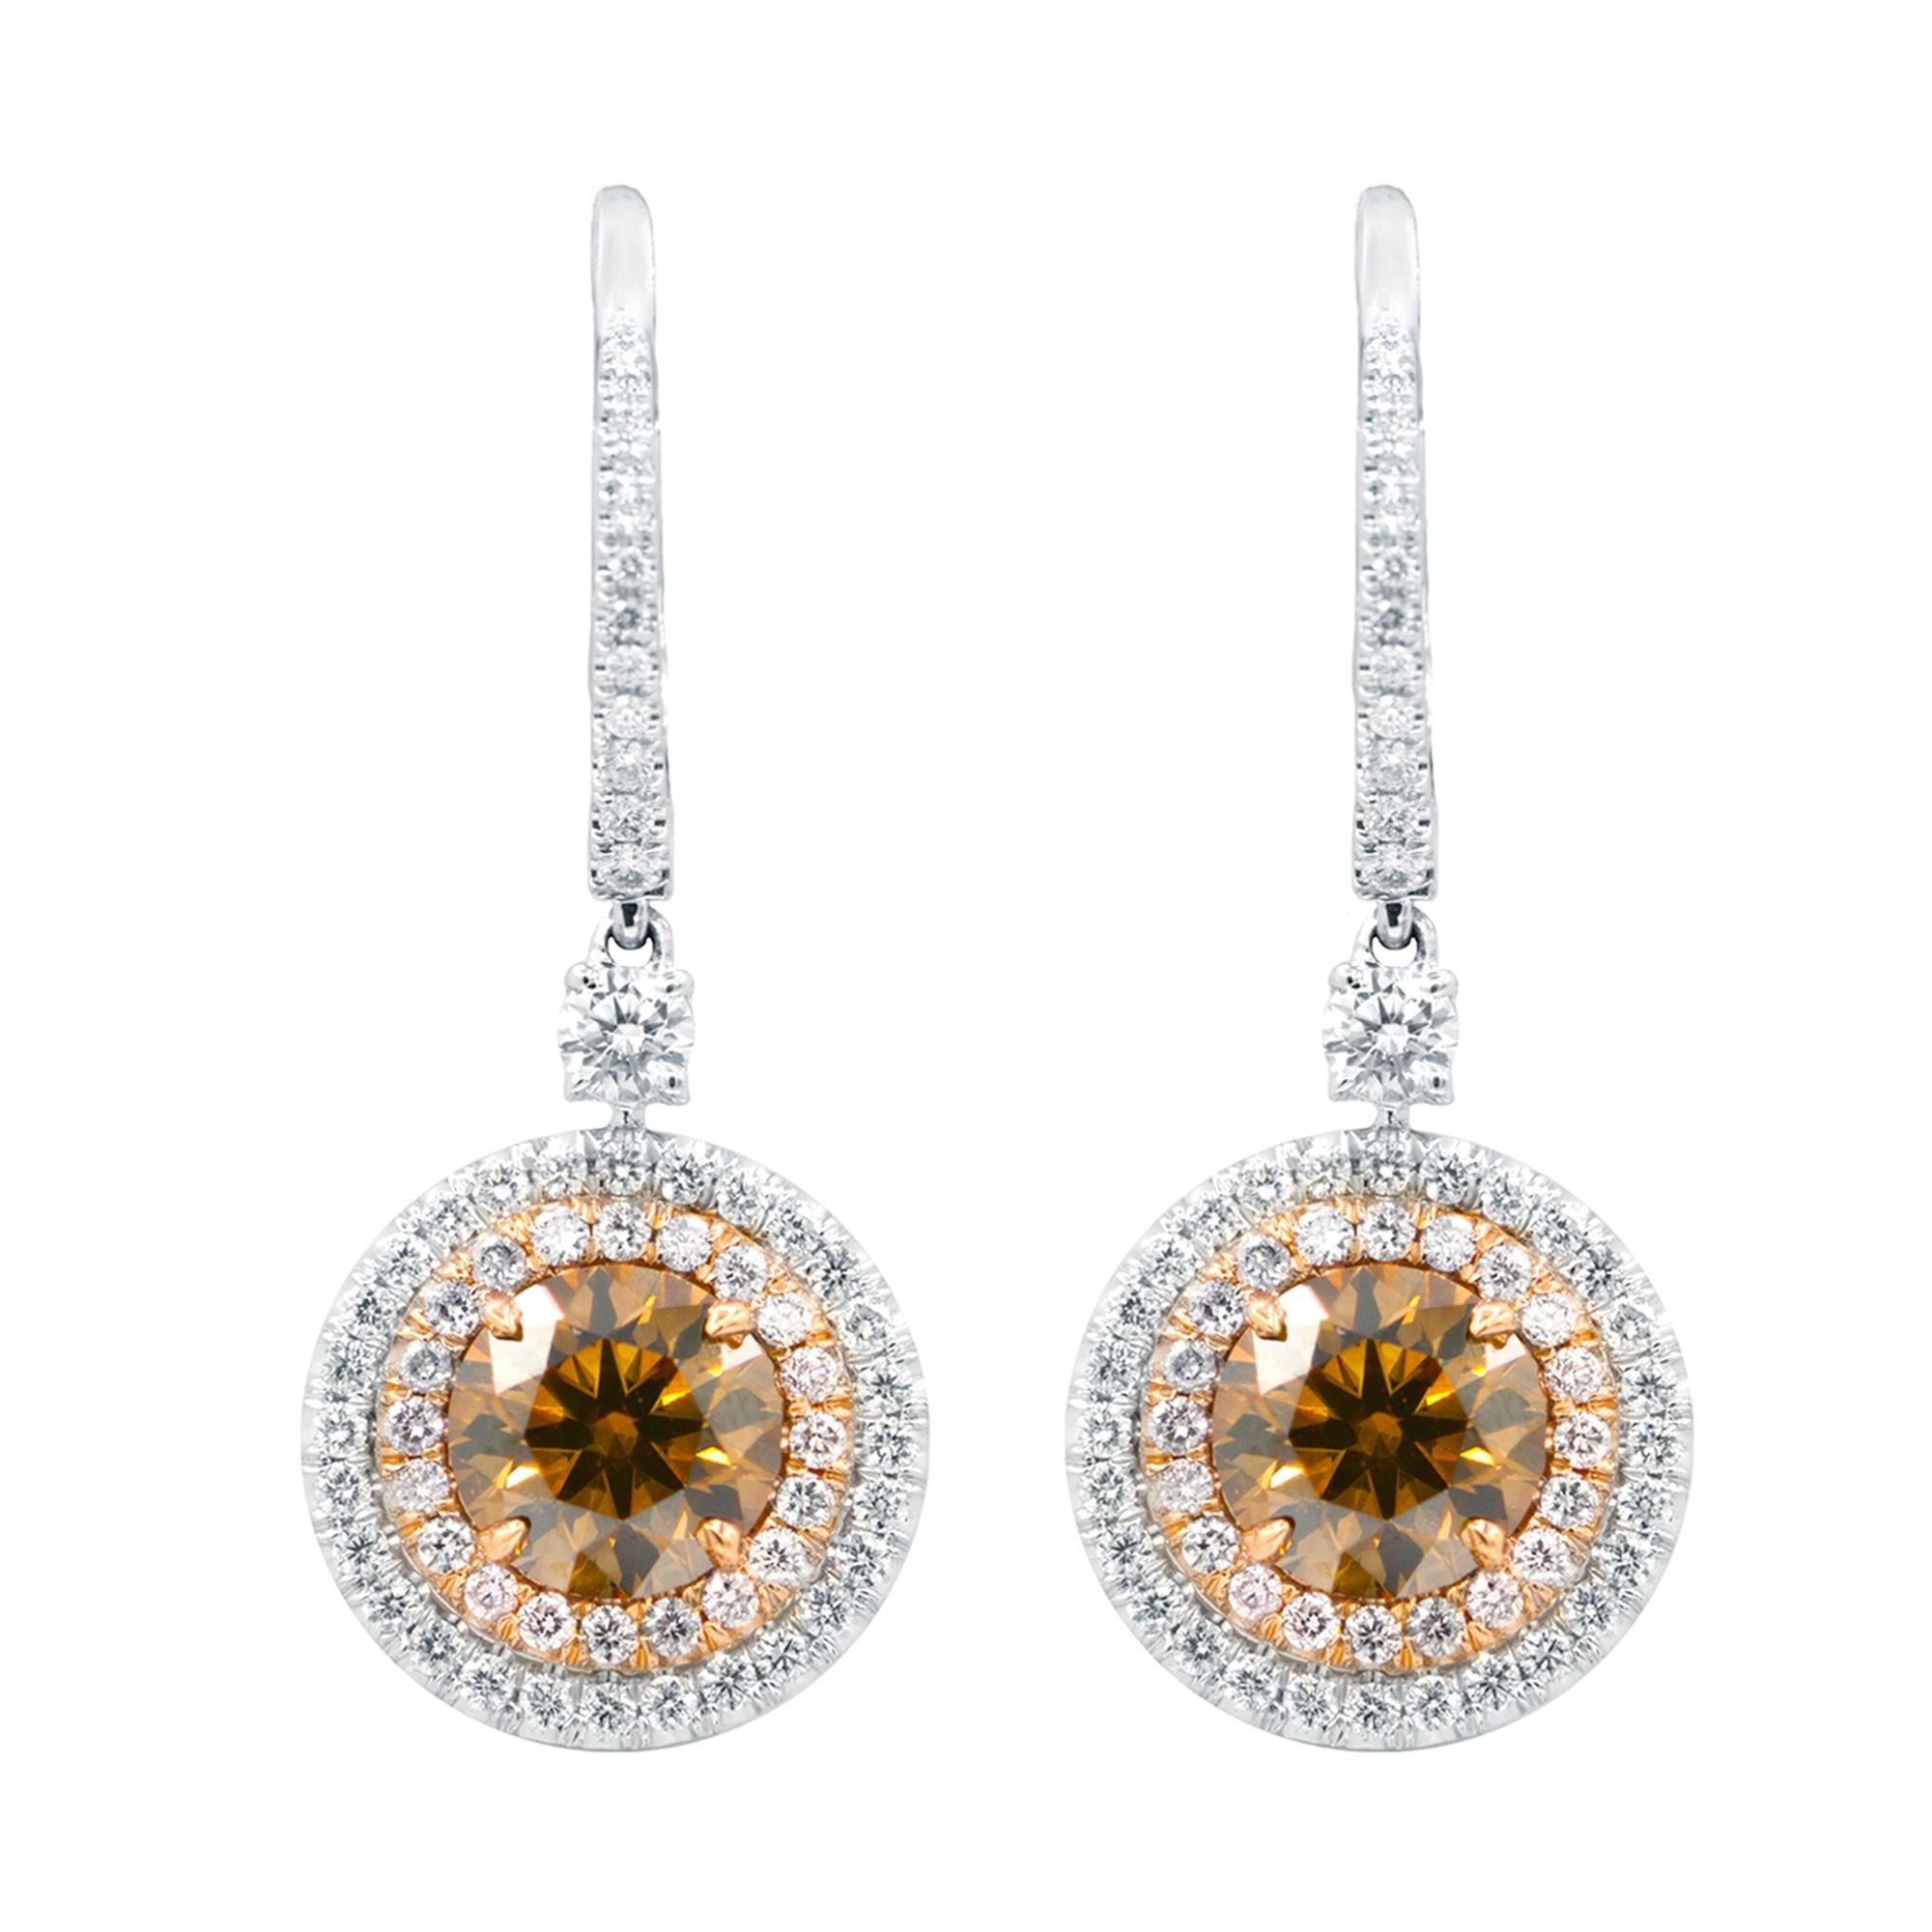 Diana M. Fine Jewelry 18k Two-Tone 4.02 Ct. tw. Diamond Earrings